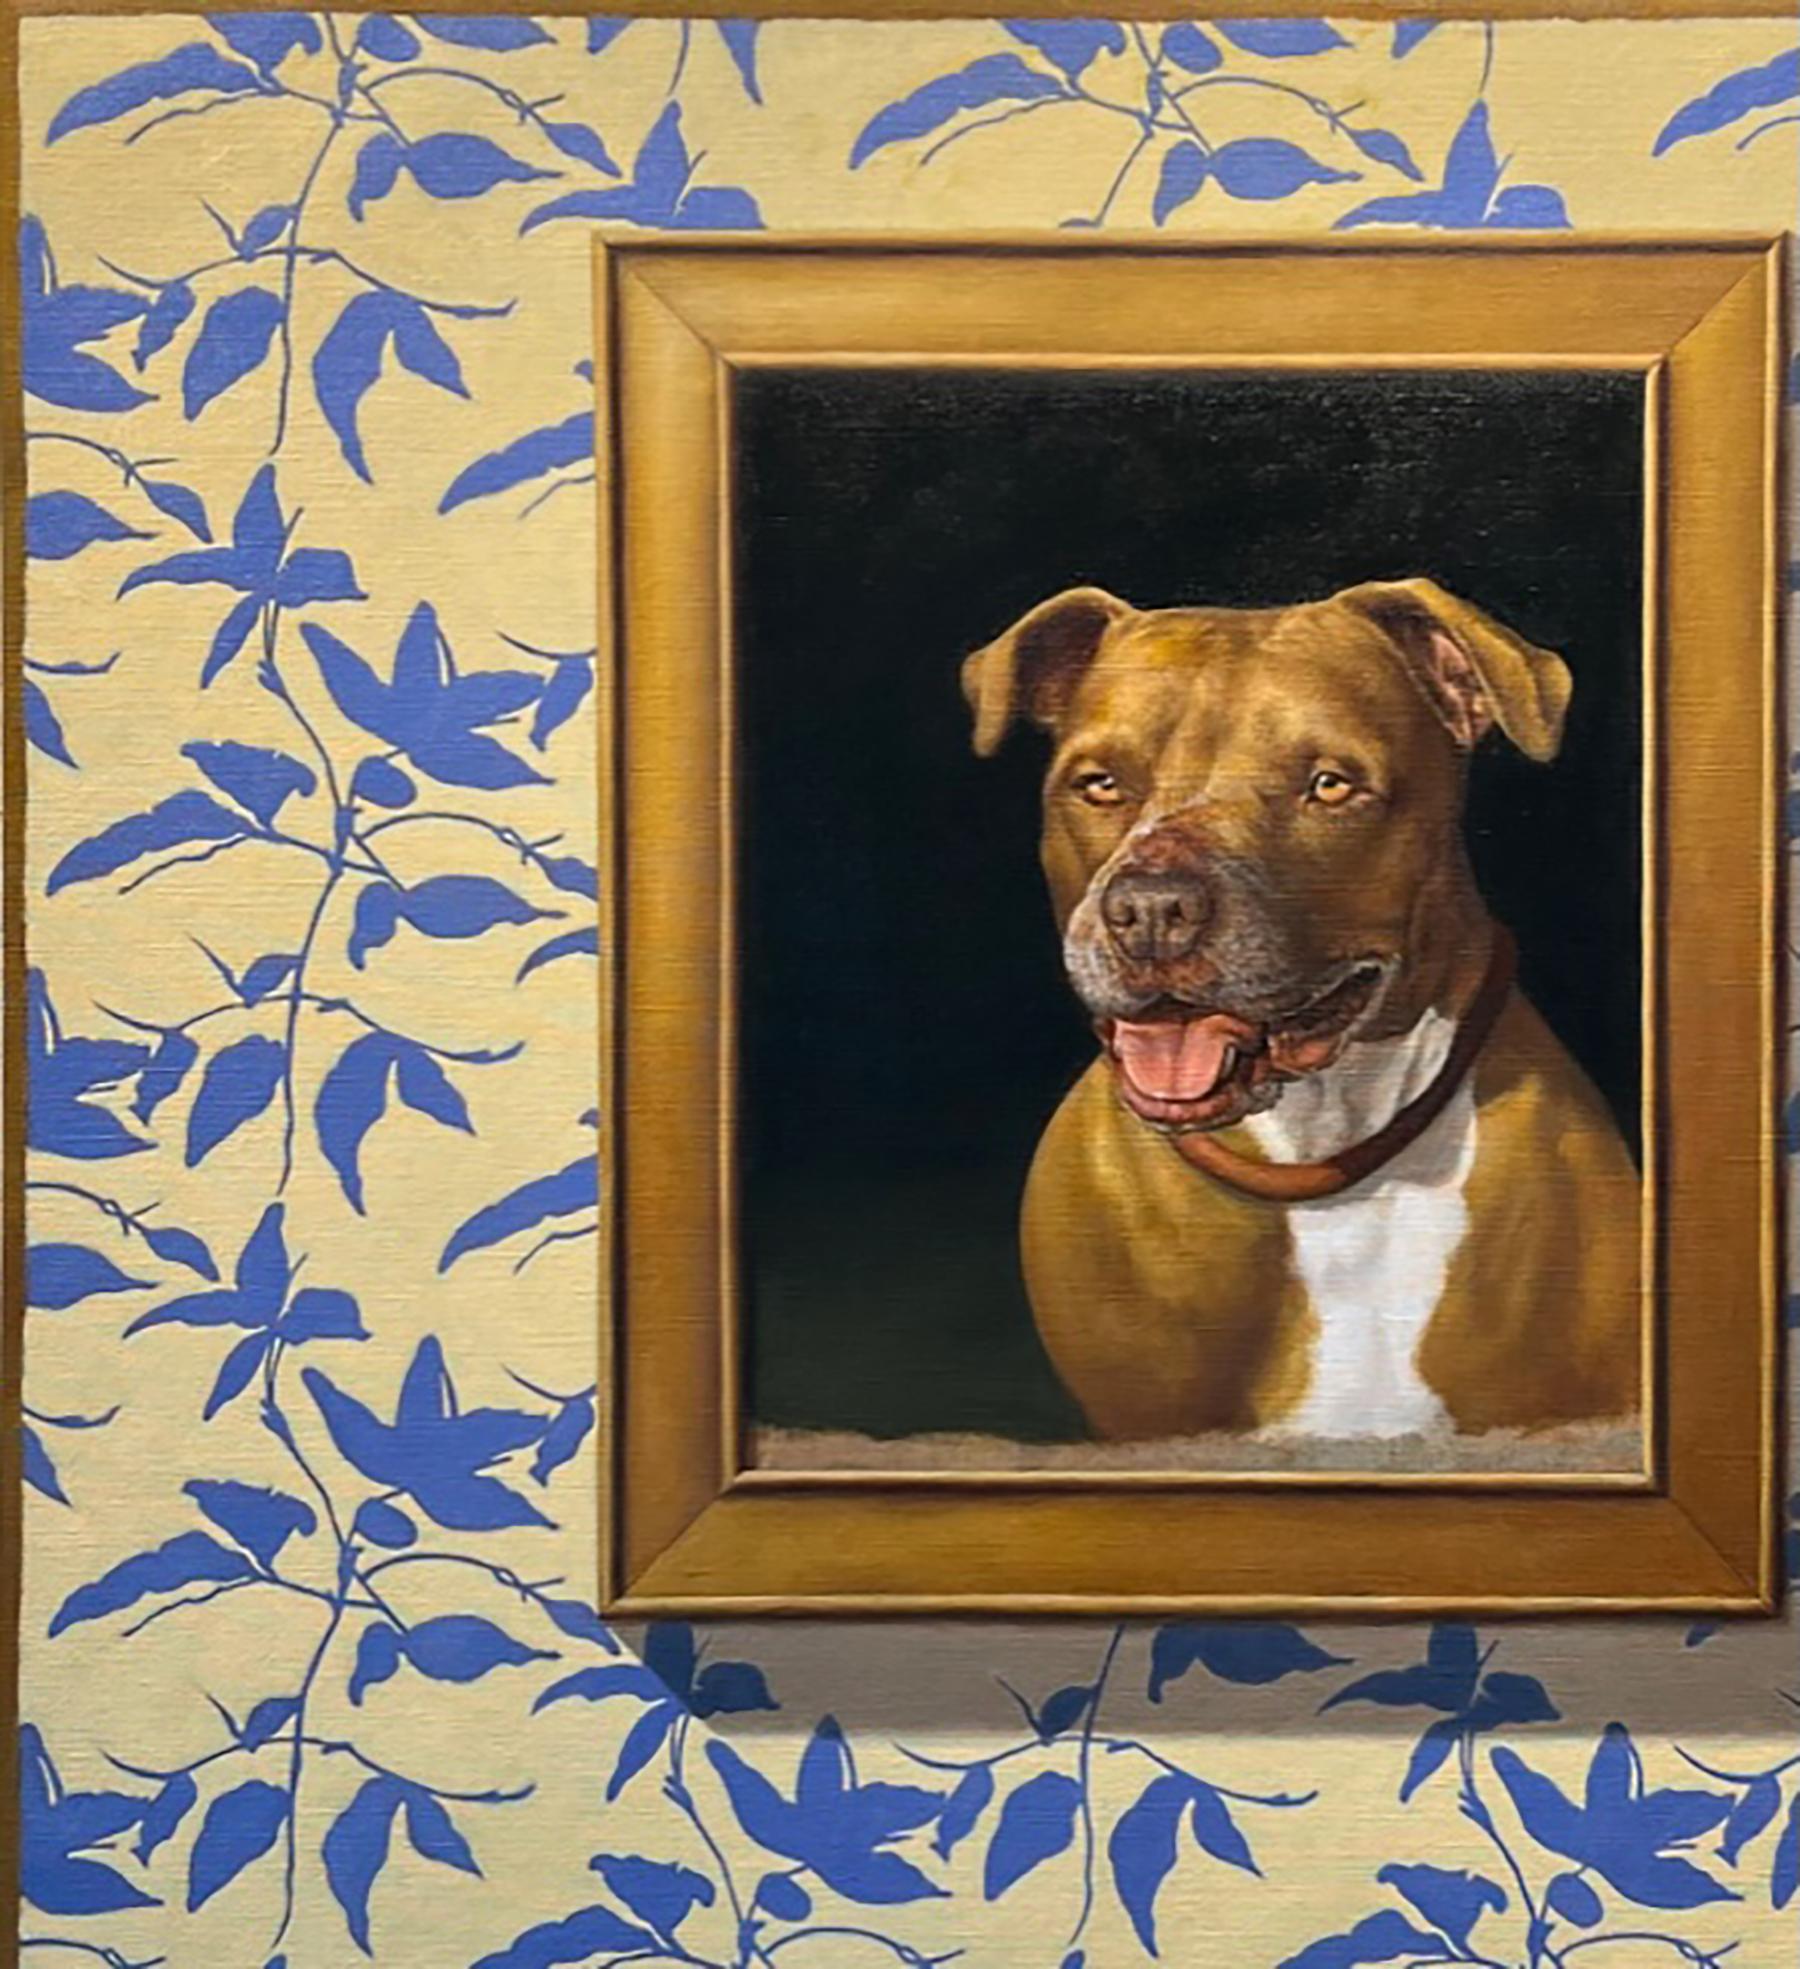 Edward Butler Animal Painting - WALLPAPER, FRAME, DOG - Realism / Humor / Pitbull